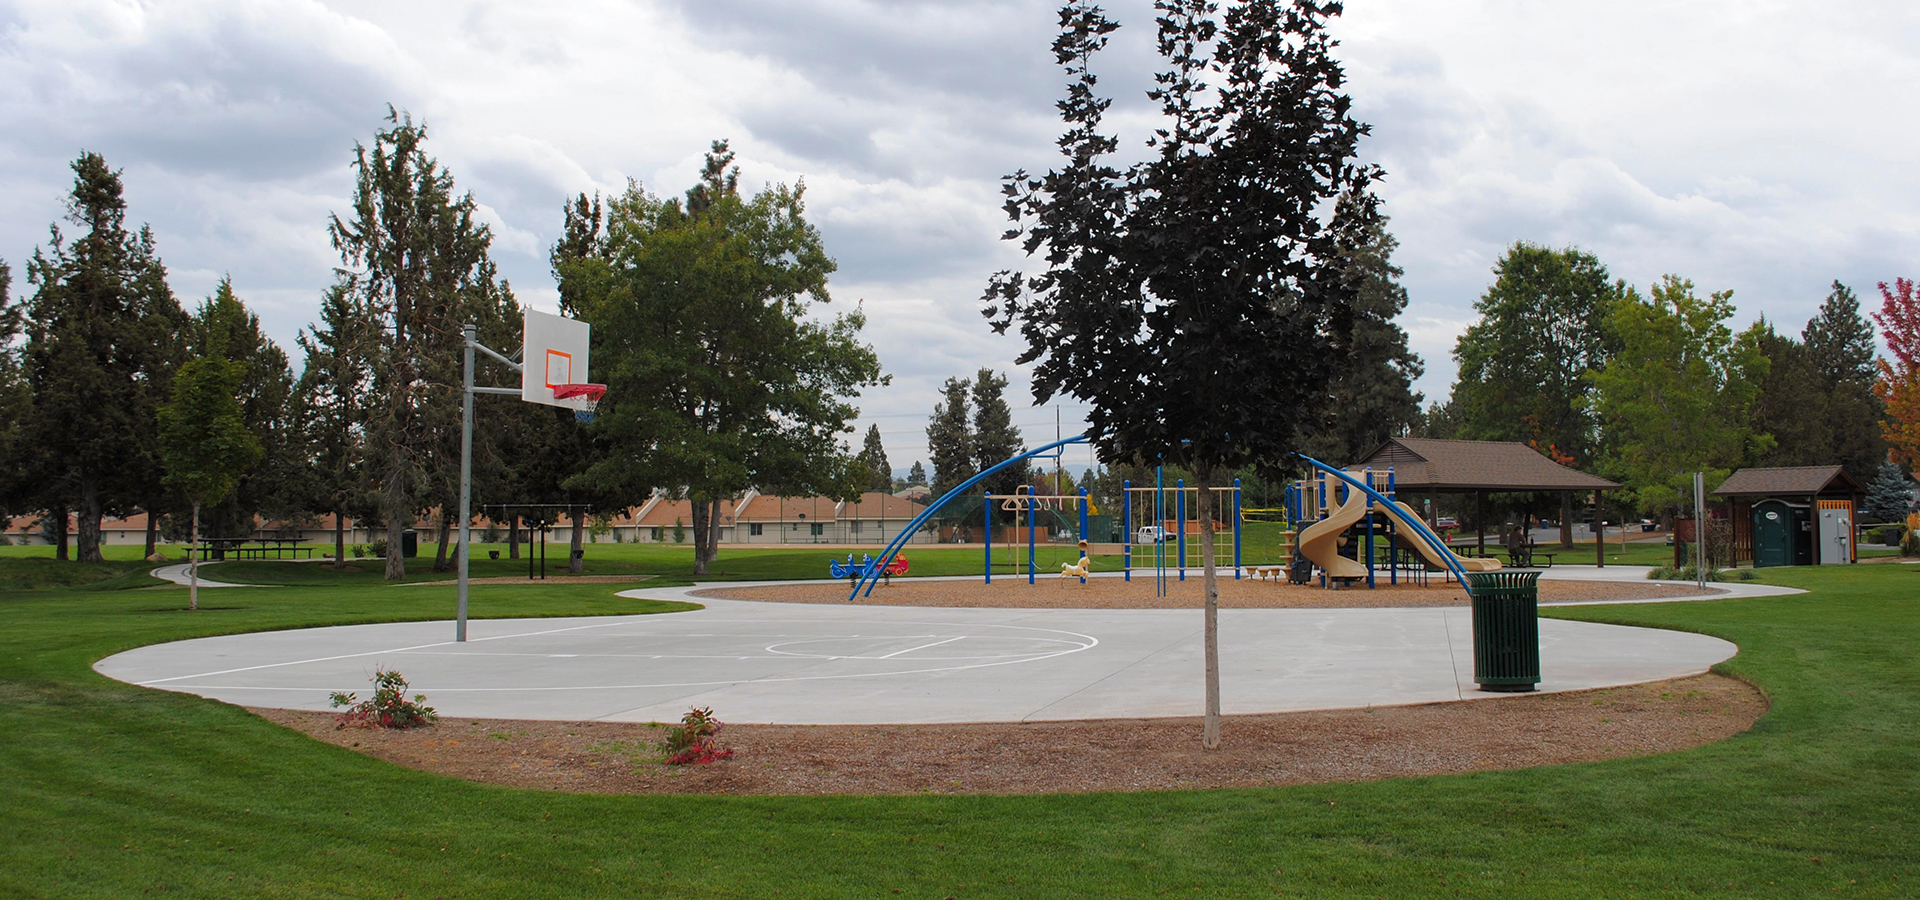 Basketball court at Kiwanis Park.